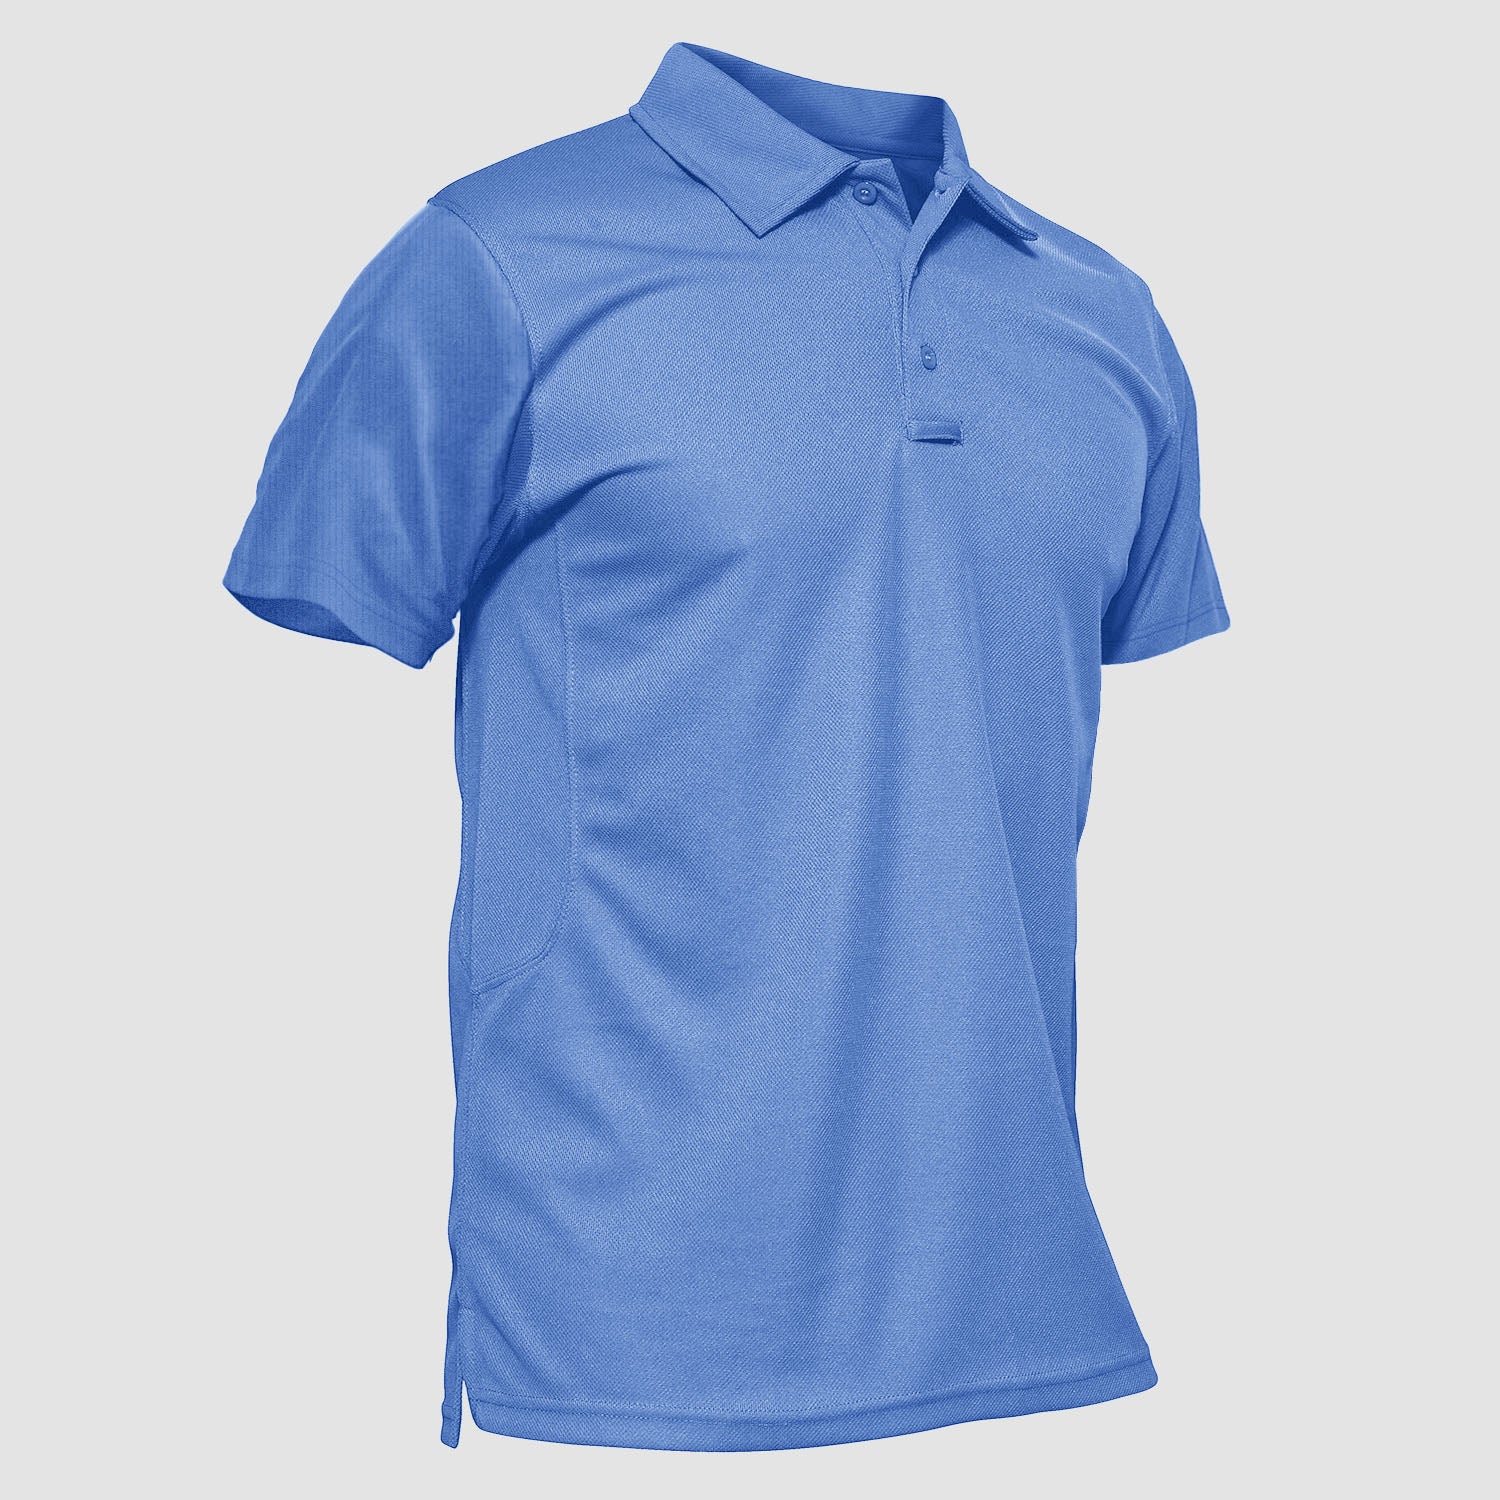  Golf Shirts For Men Summer Shirts Mens Polo Shirts Short  Sleeve Shirts For Men Quick Dry Shirts Work Shirts For Men T Shirts Fishing  Shirts